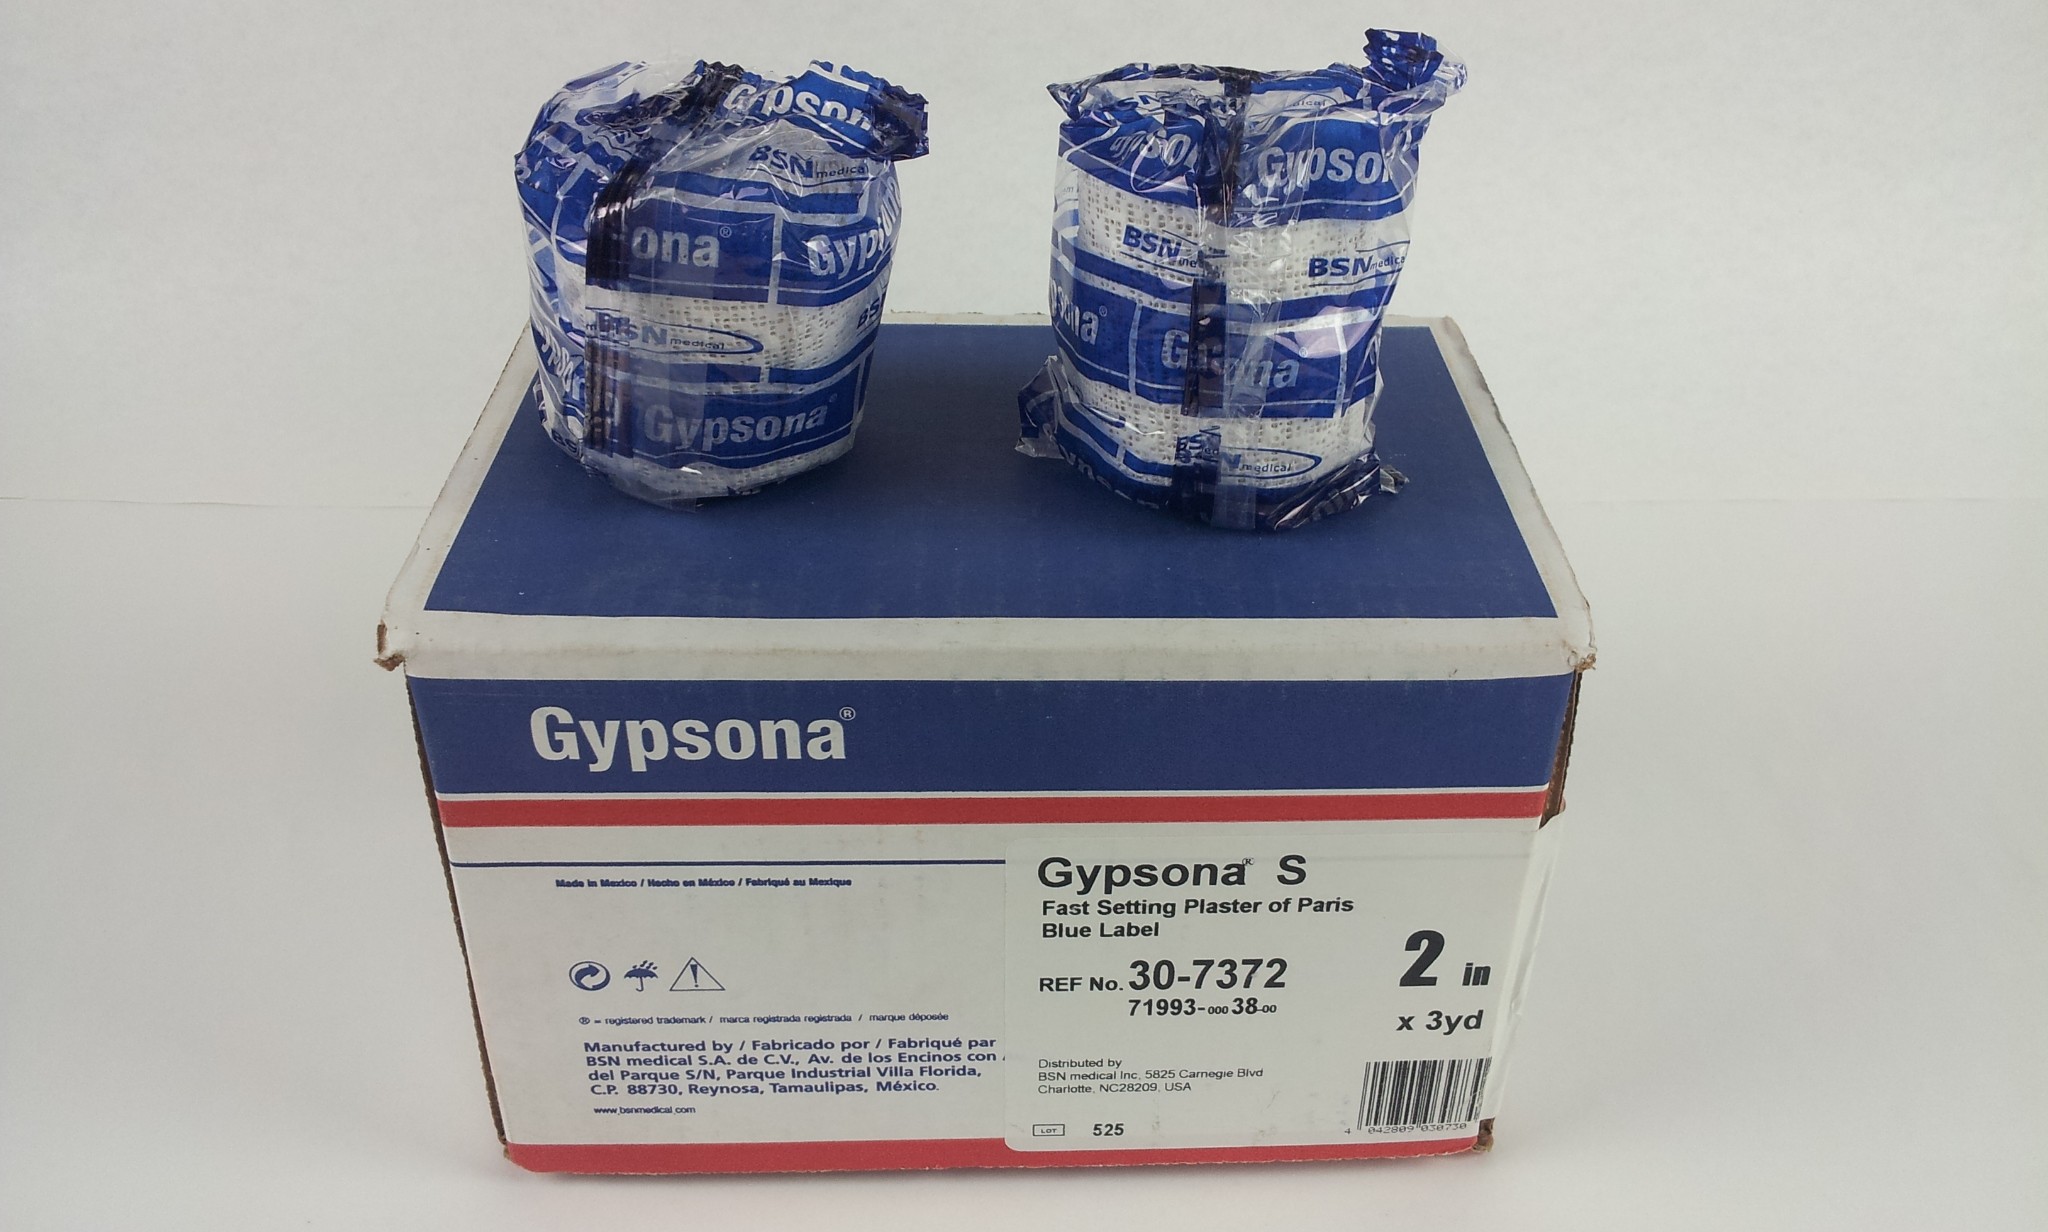 Gypsona S 30-7372 Fast Setting Plaster of Paris Blue Label  2" x 3yd Box of 12